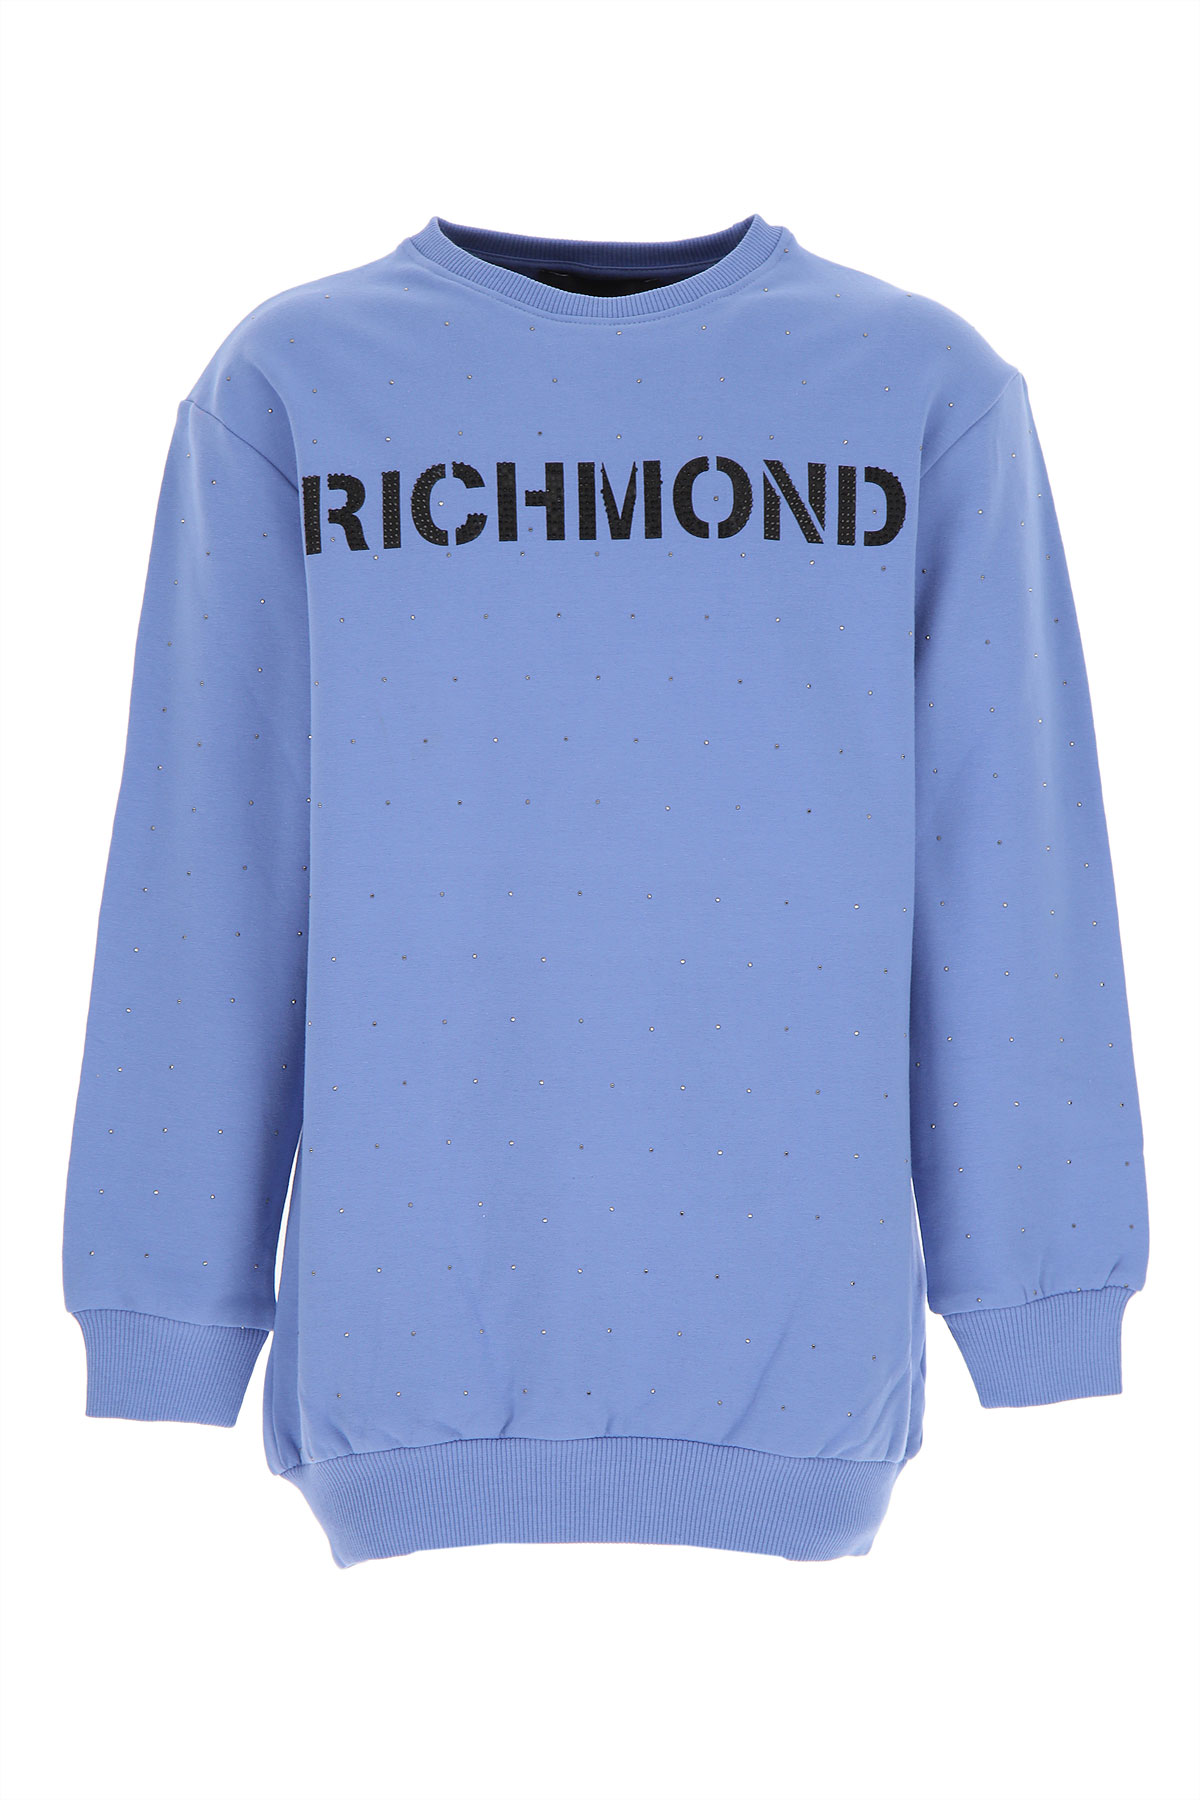 Richmond Kinder Sweatshirt & Kapuzenpullover für Mädchen Günstig im Sale, Königsblau, Baumwolle, 2017, 12Y 14Y 16Y 4Y 6Y 8Y